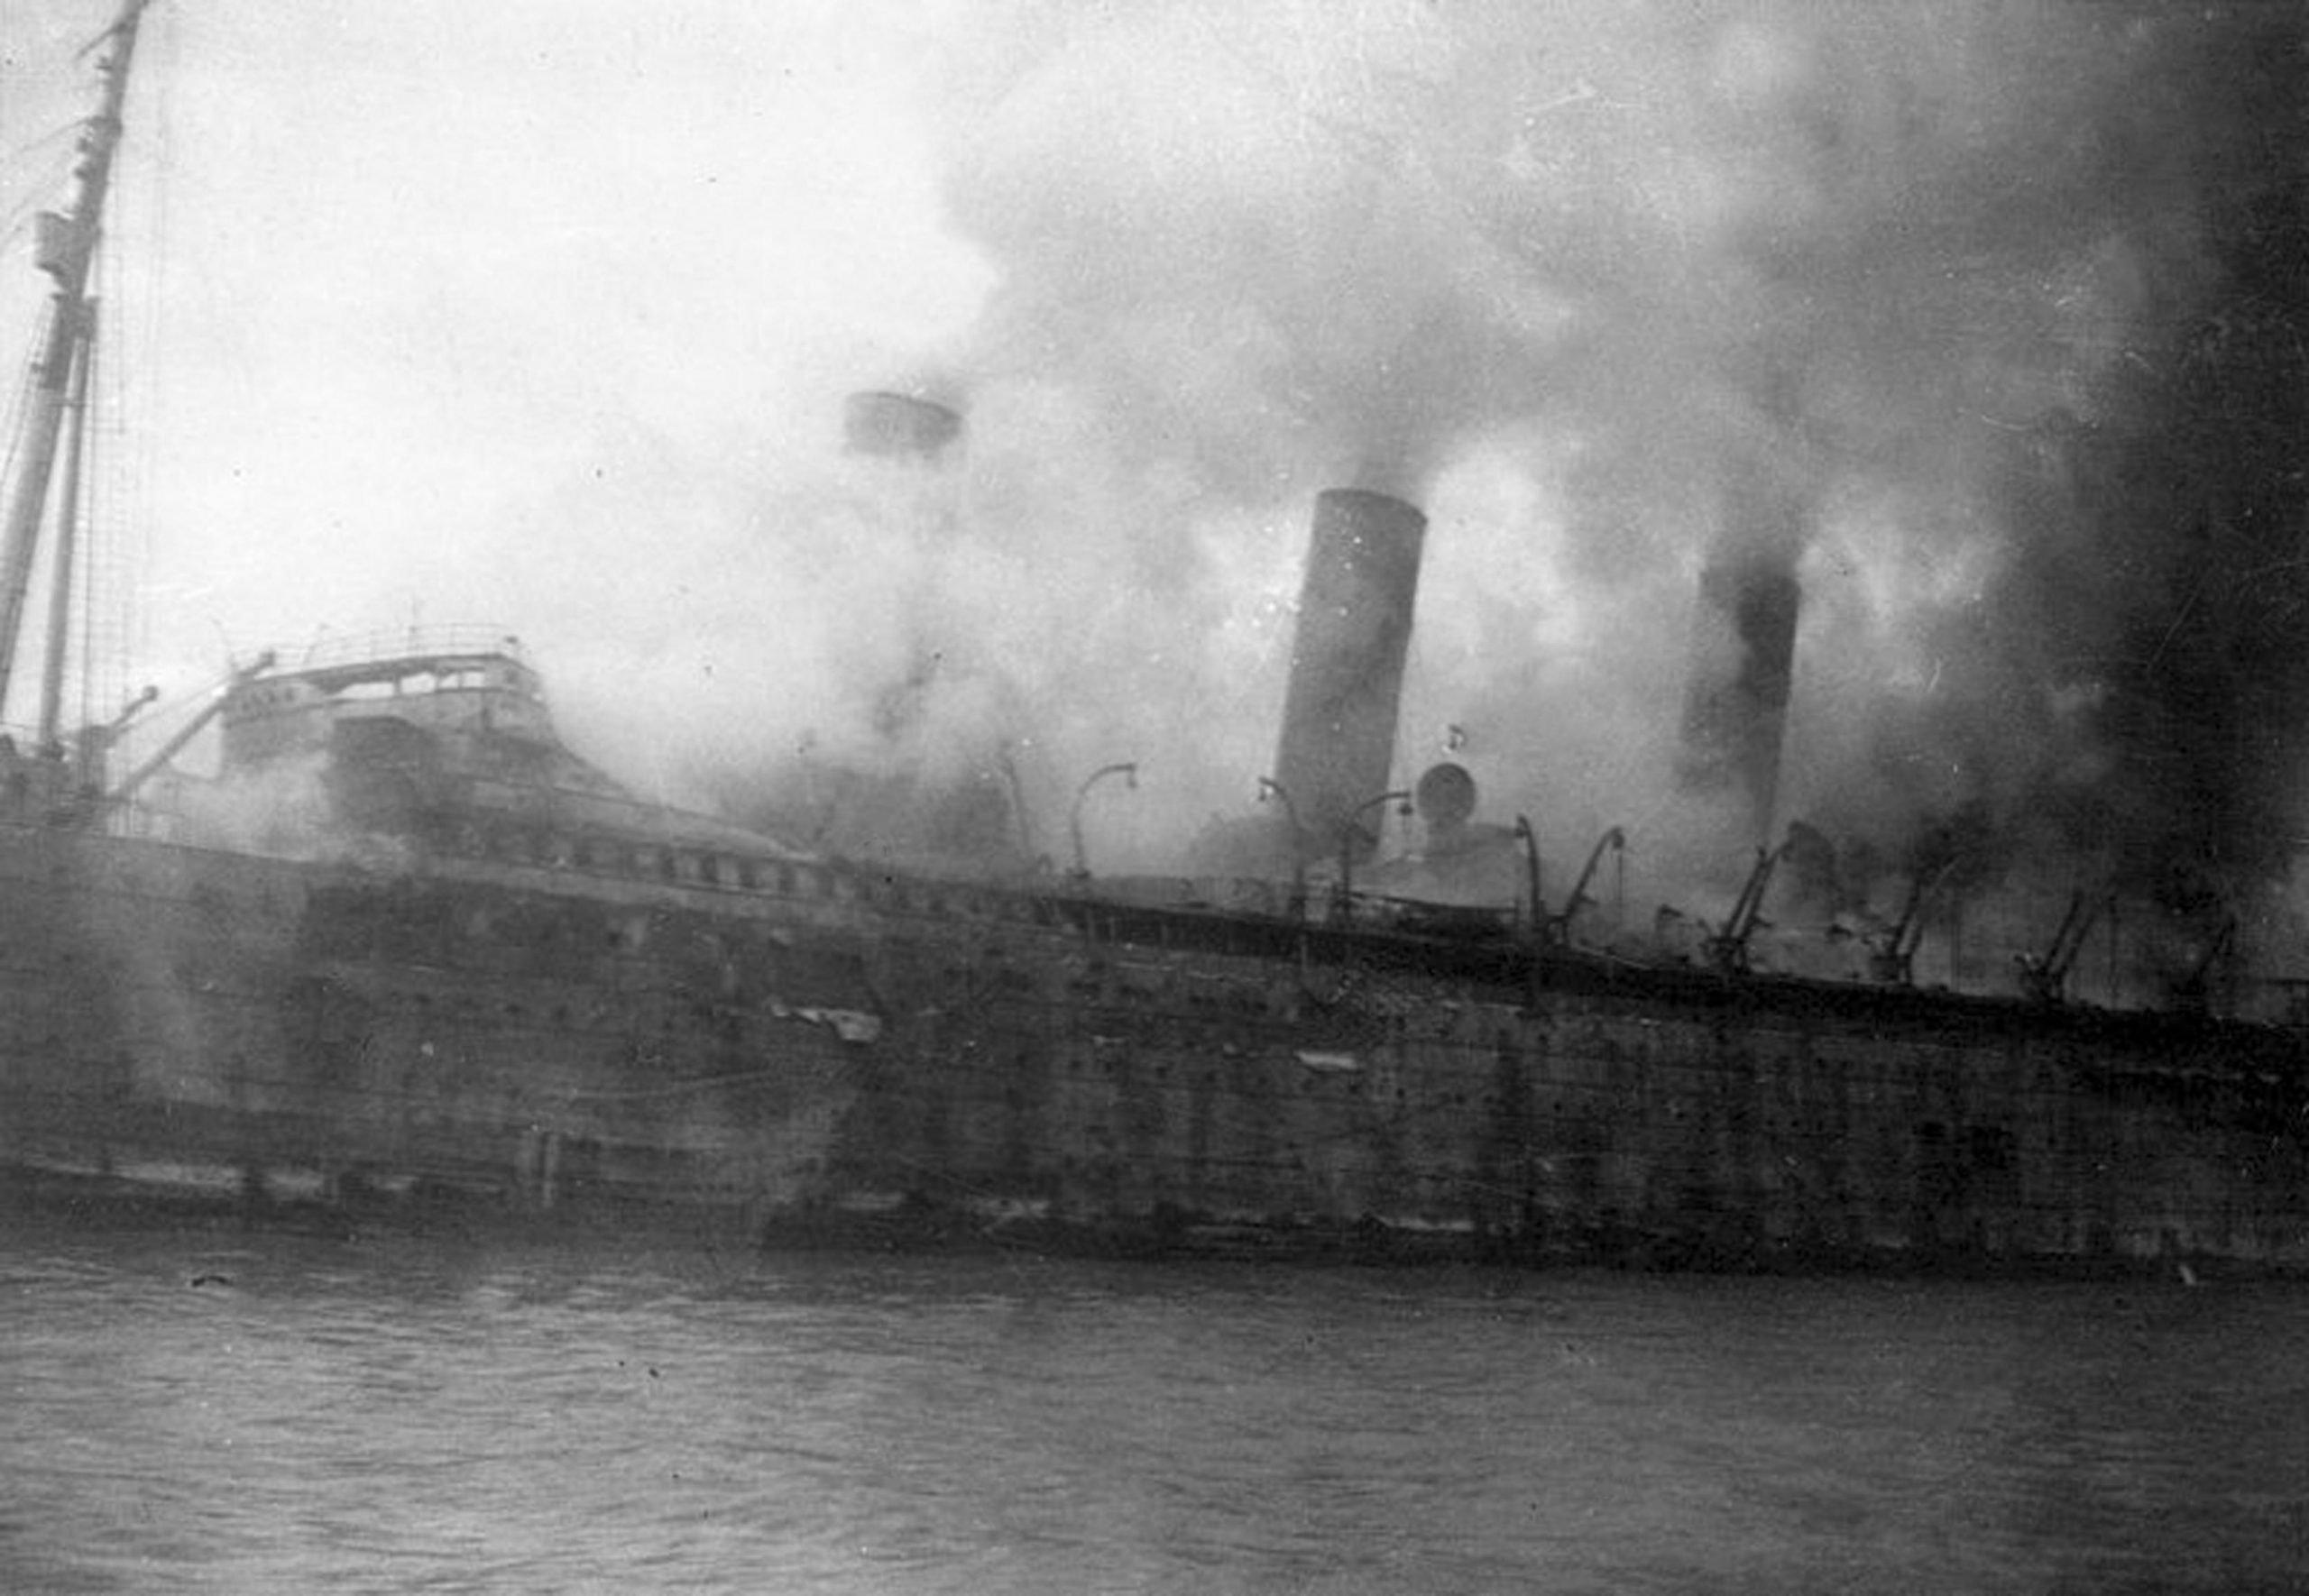 A burning British Empress of Asia passenger liner